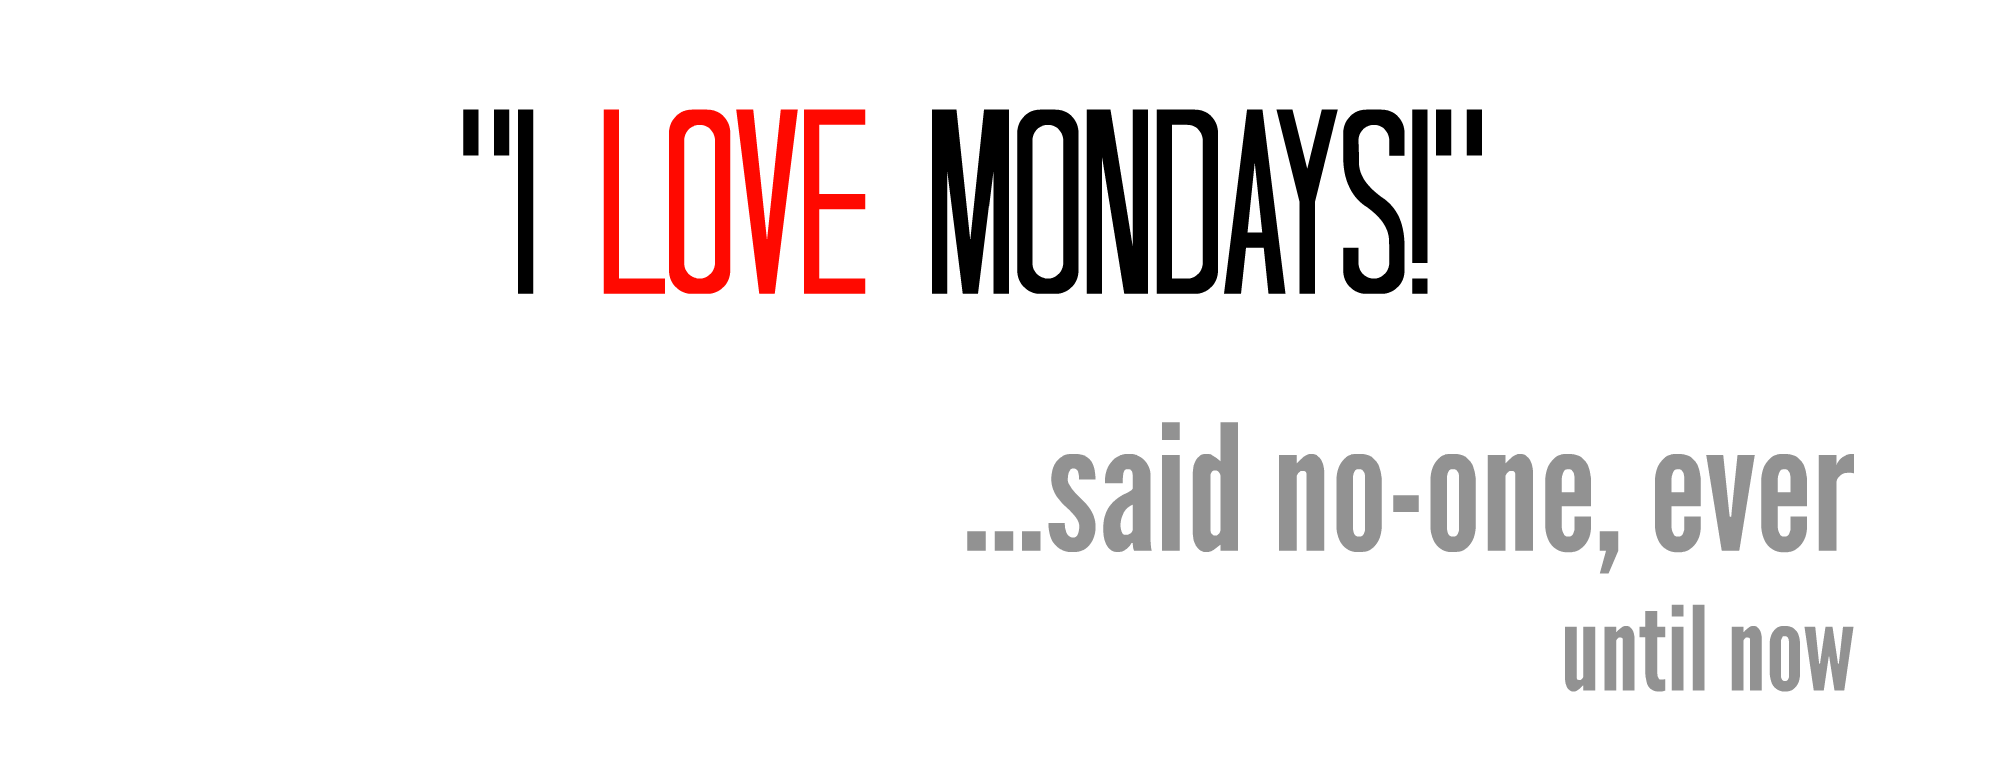 Six Super Reasons to Love Mondays!